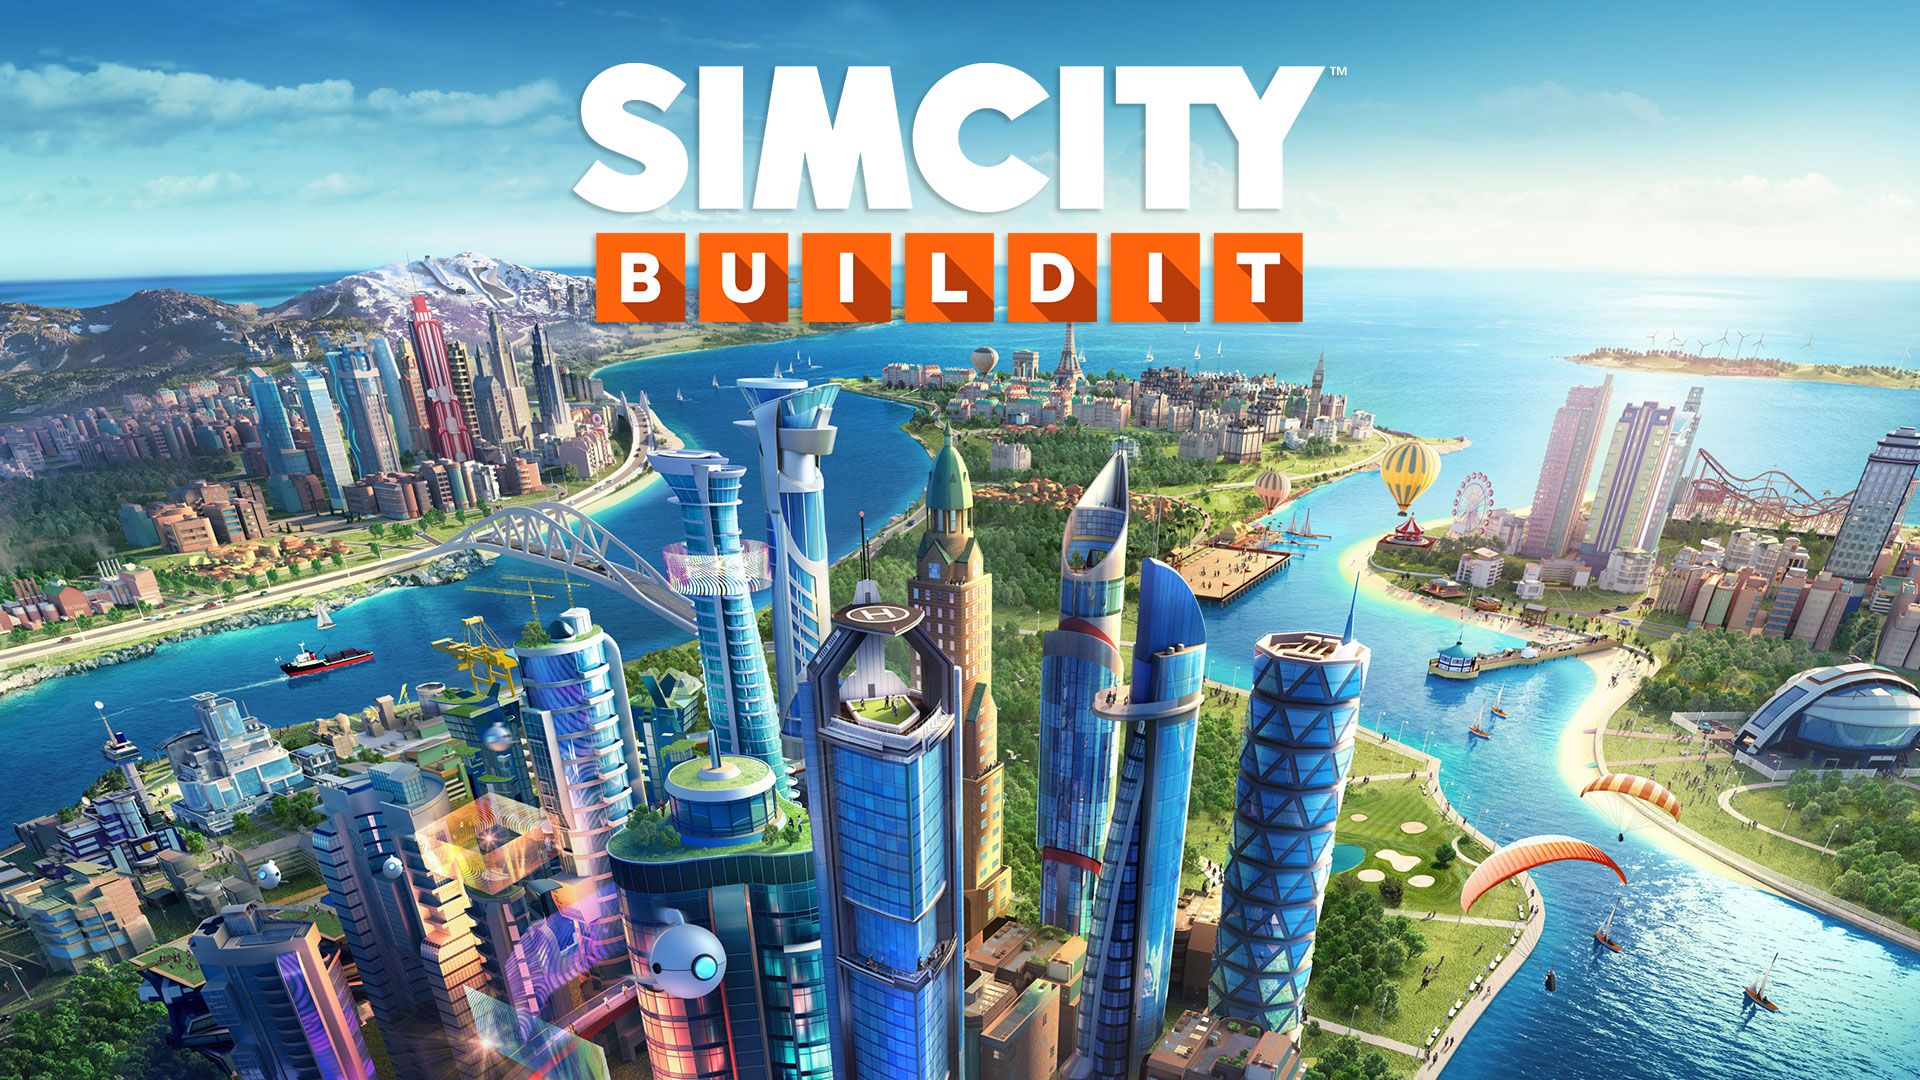 simcity buildit endgame layout 2017 omega